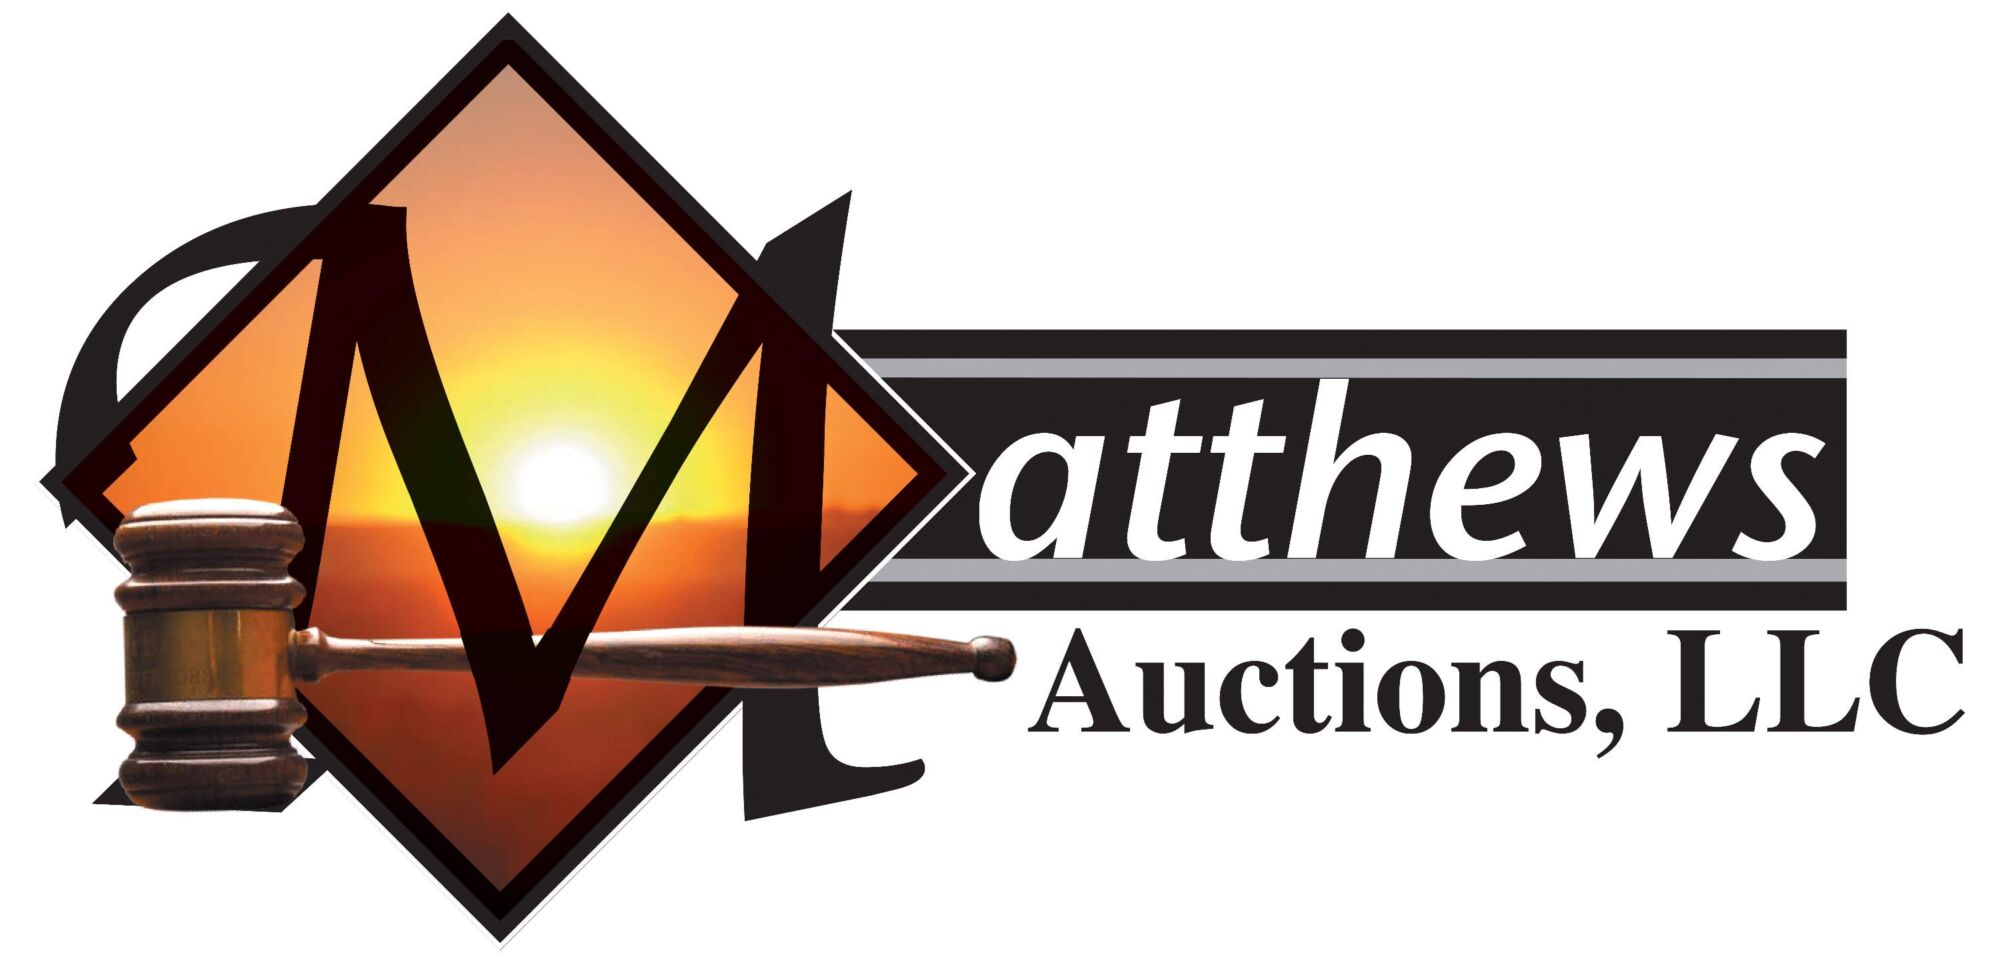 Matthews Auctions, LLC